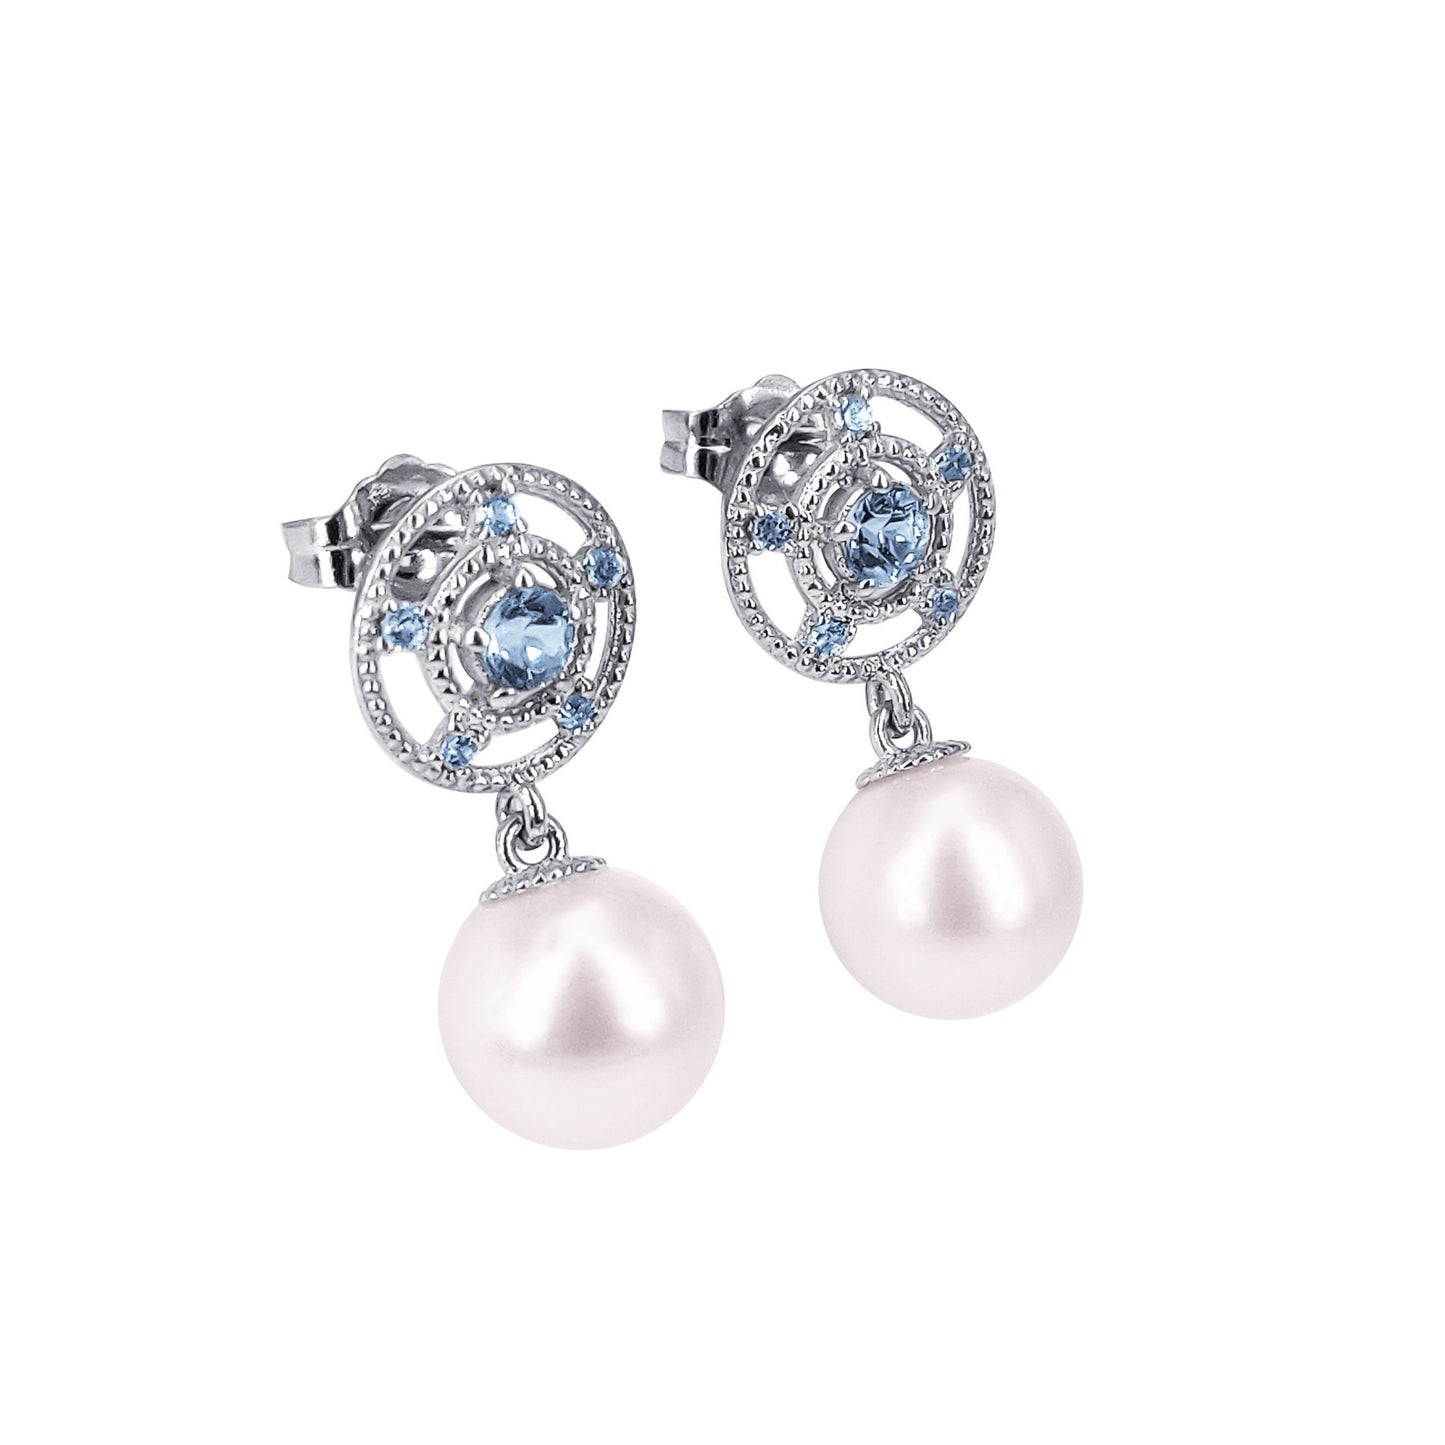 REG Pearl Earrings